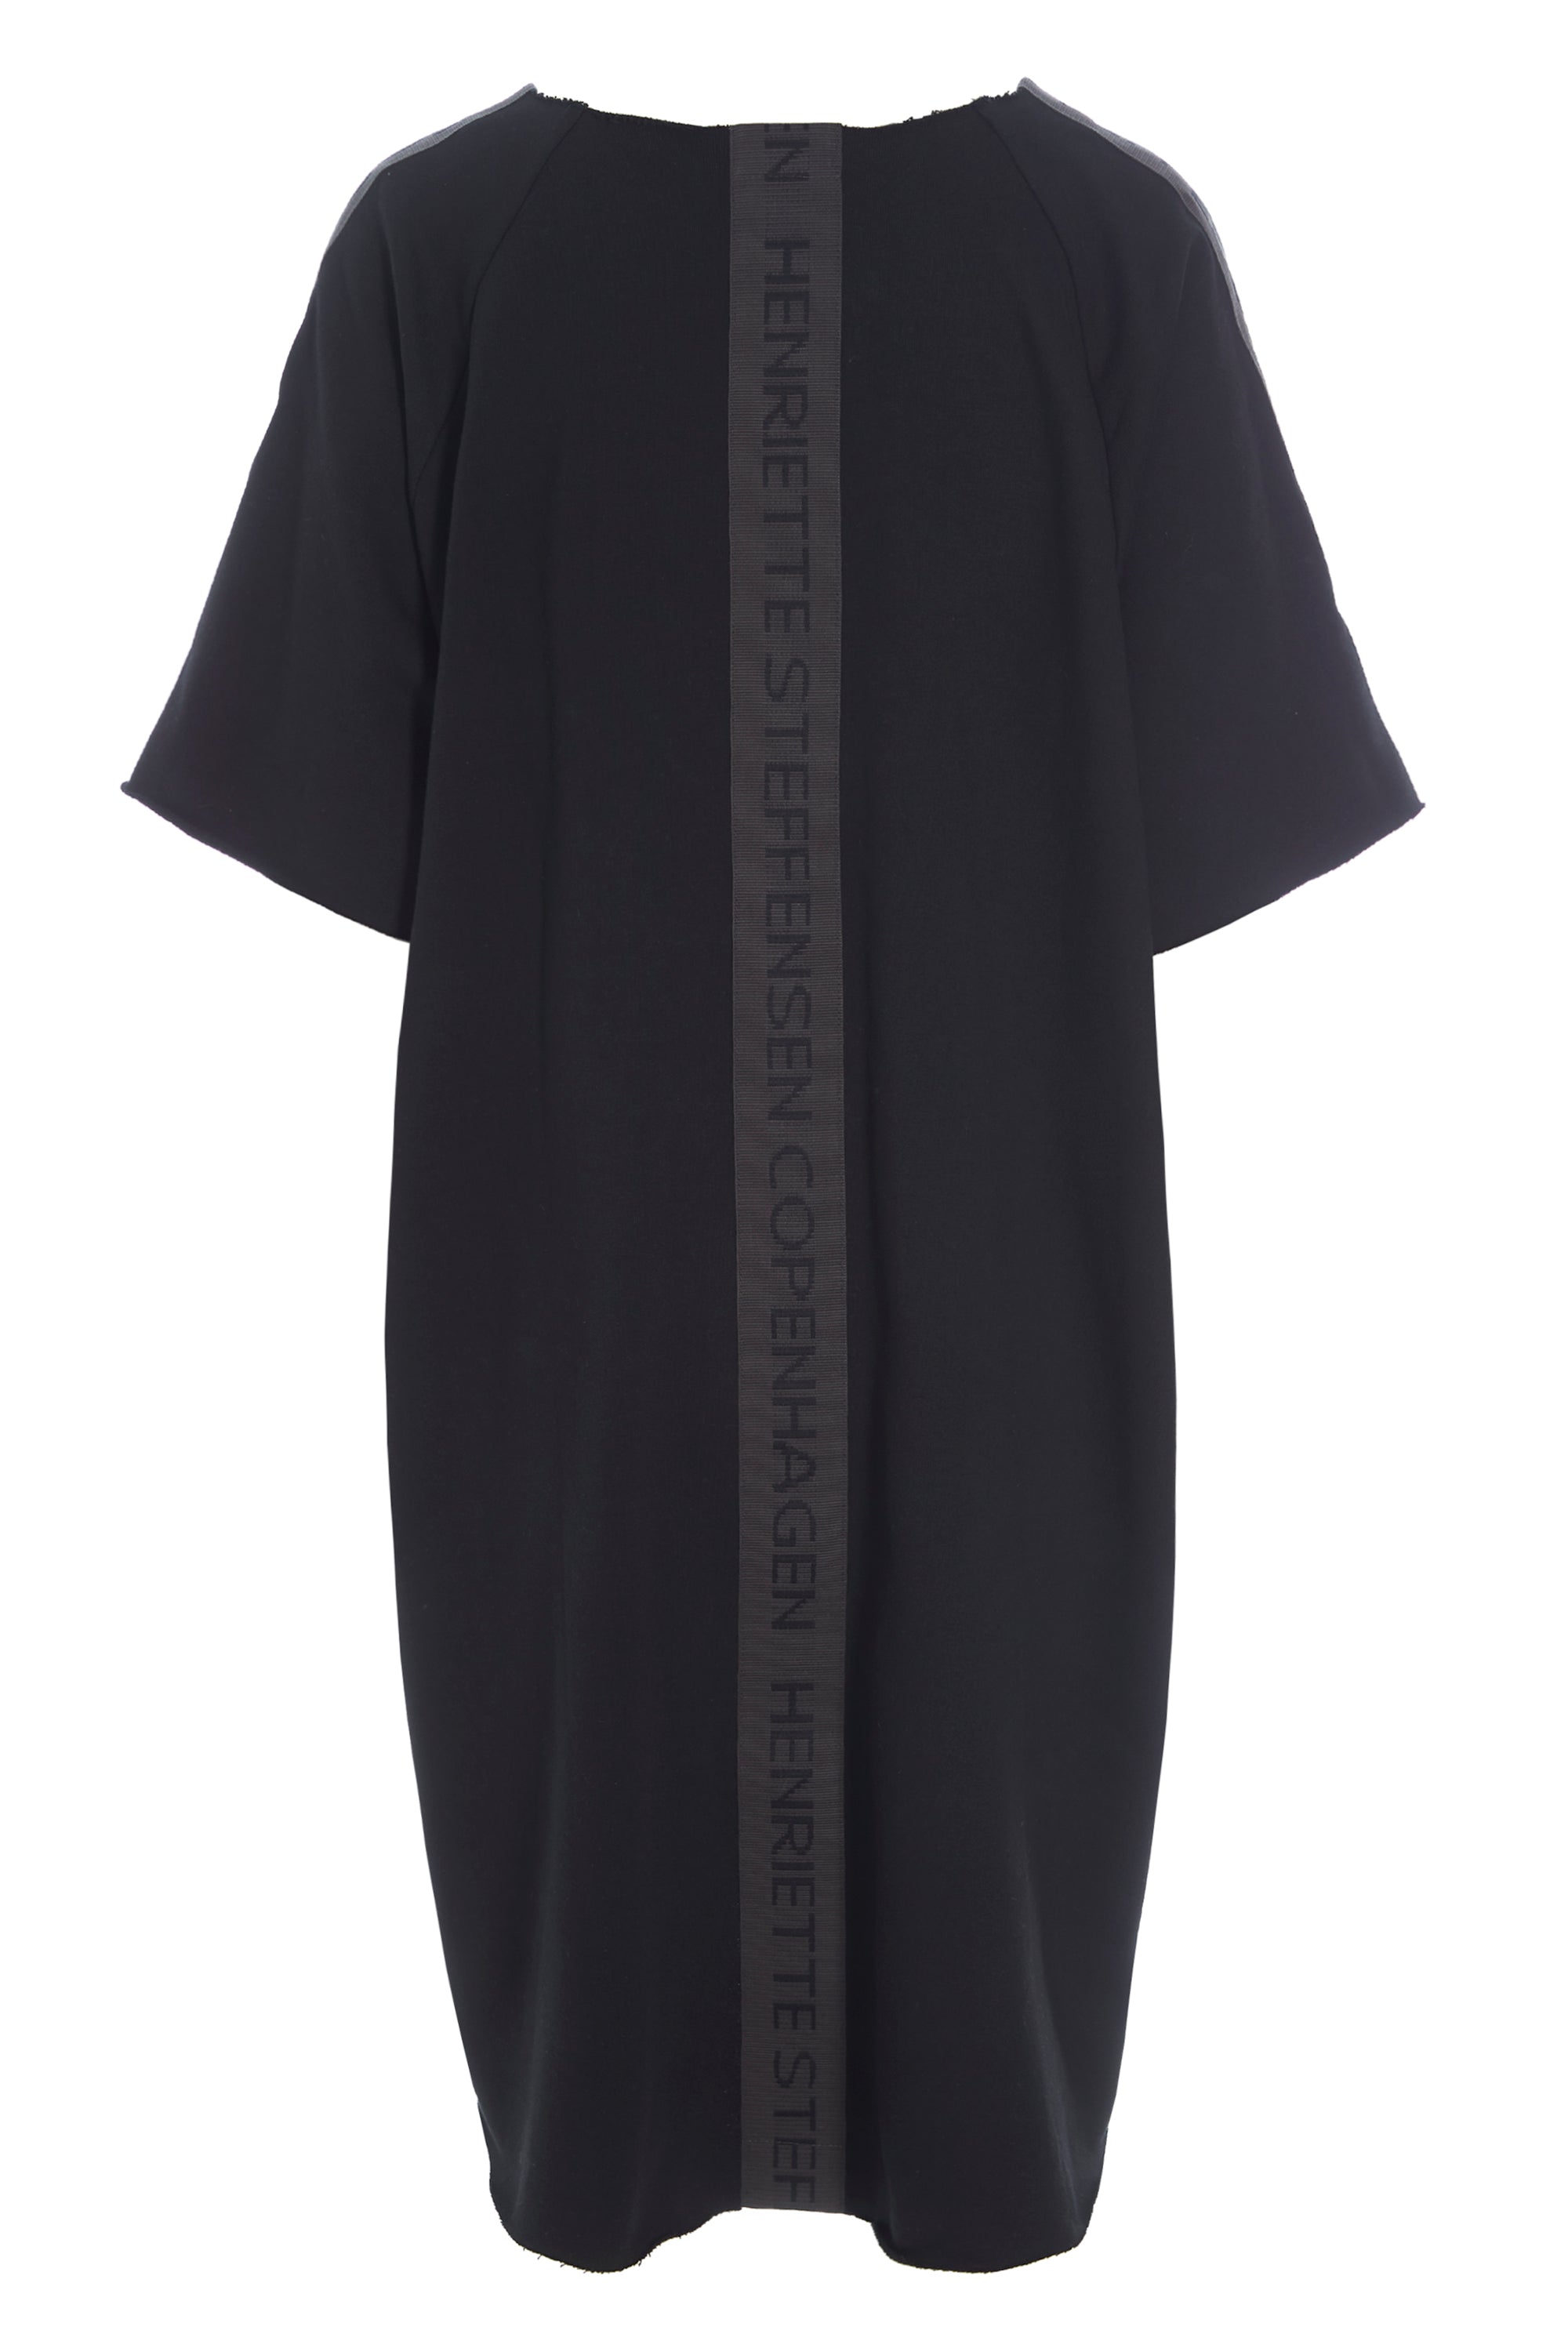 HENRIETTE STEFFENSEN COPENHAGEN DRESS - 73401 DRESS cotton BLACK 900